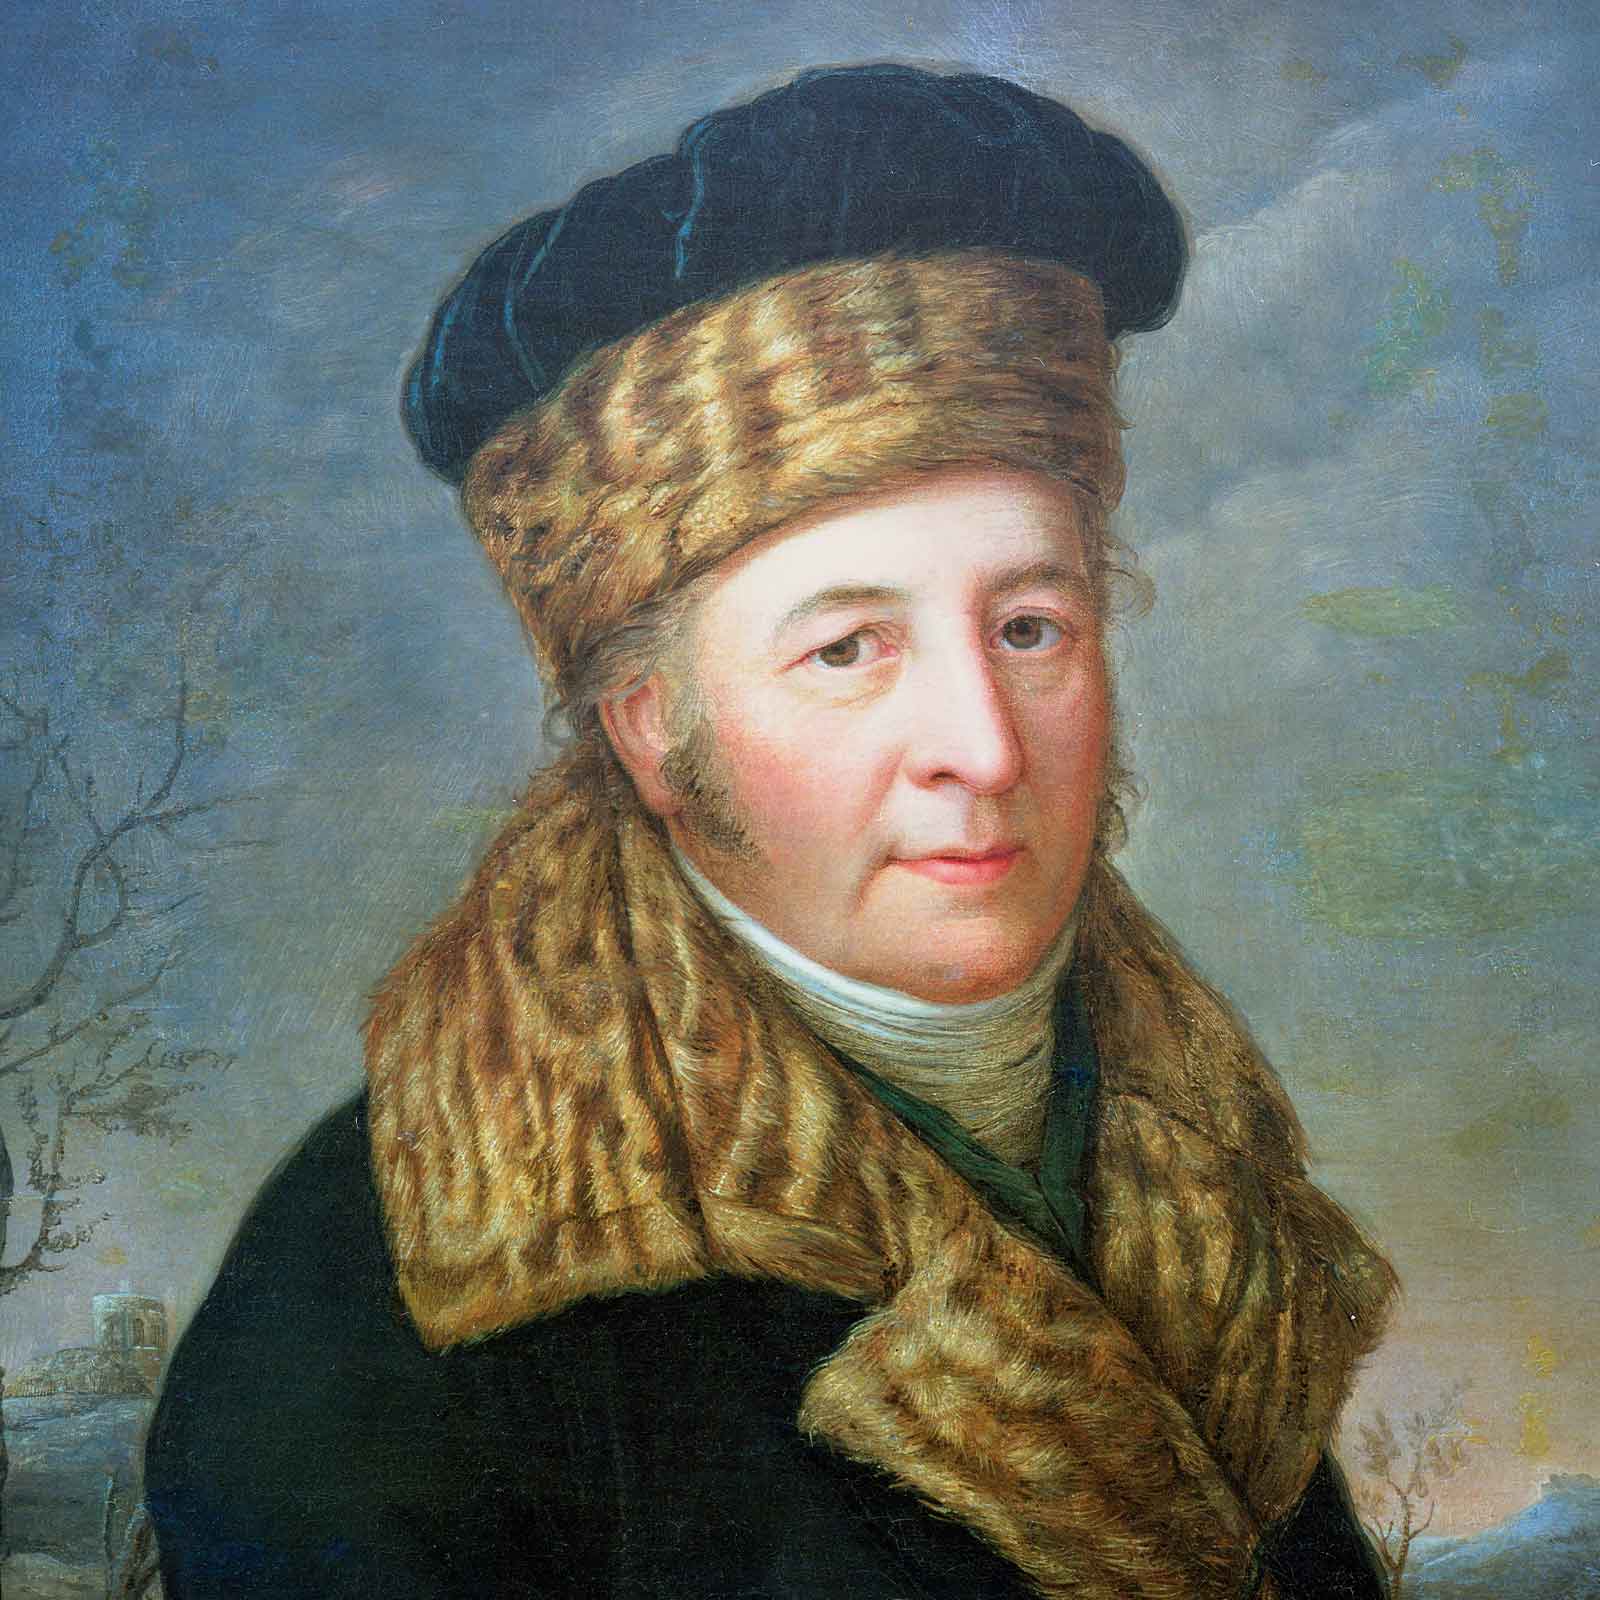 Friedrich Metzler